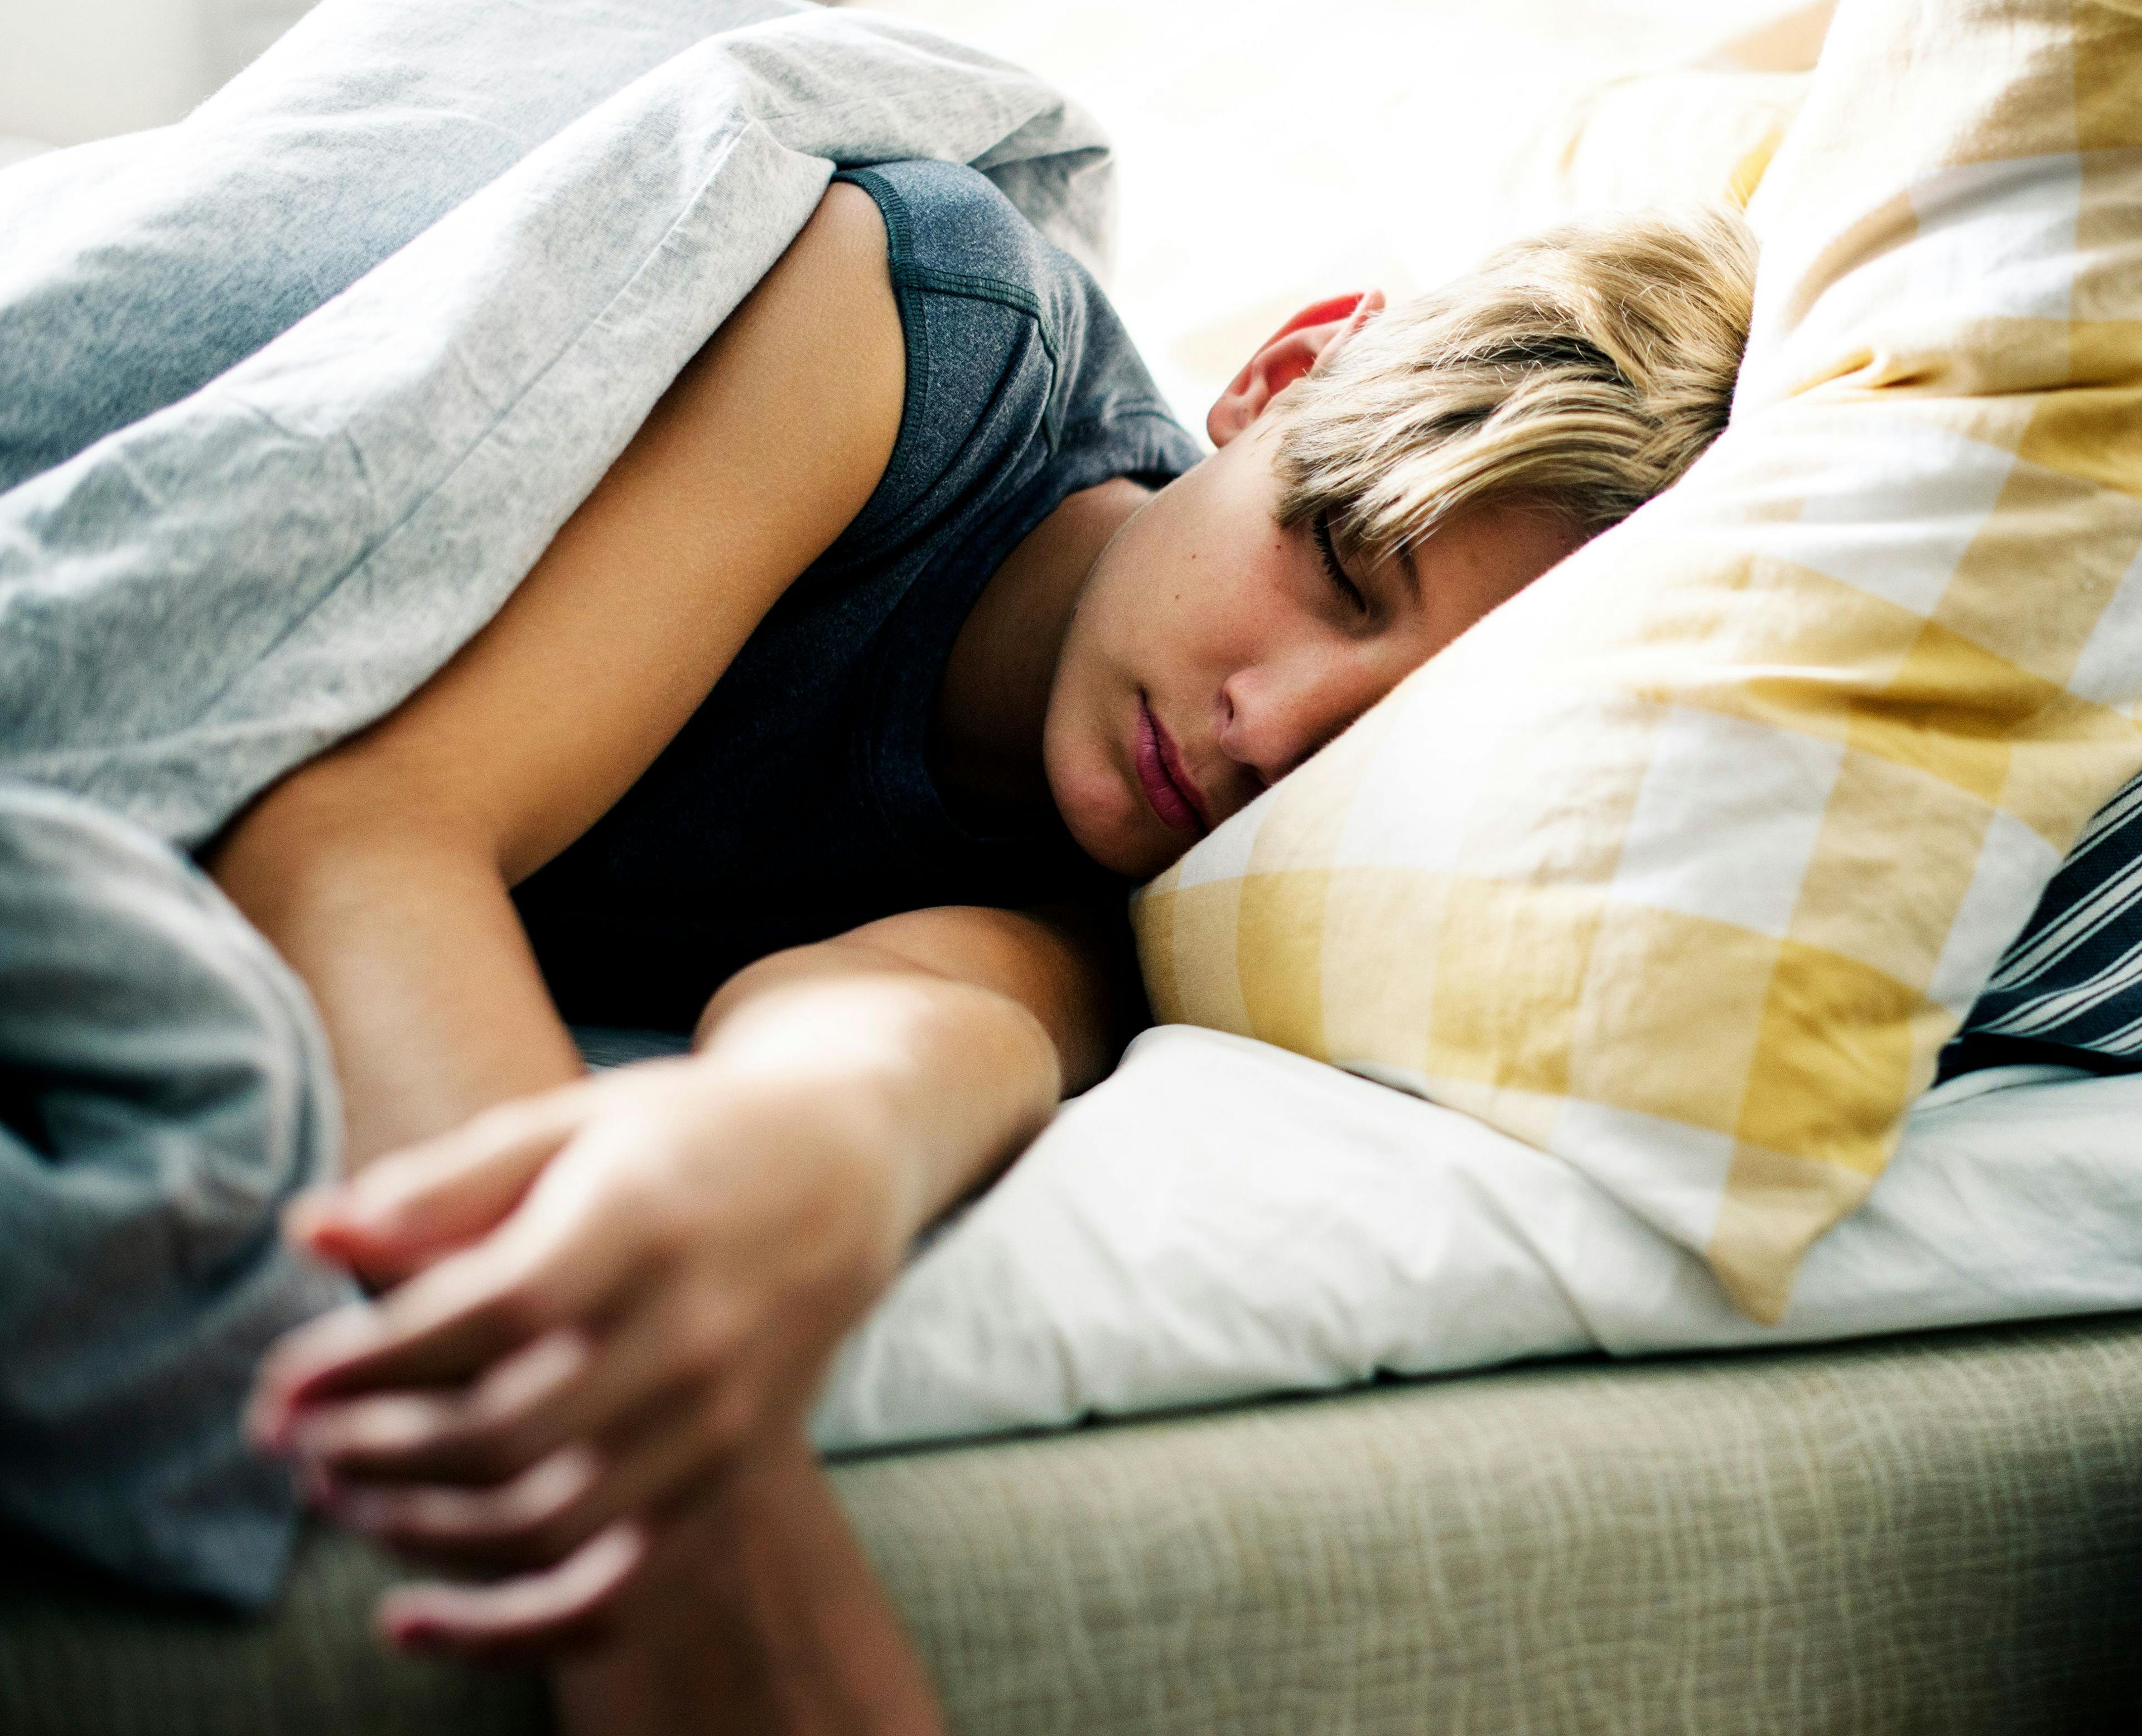 Investigators link sexual orientation to increased sleep issues among adolescents | Image Credit: © Rawpixel.com - © Rawpixel.com - stock.adobe.com.